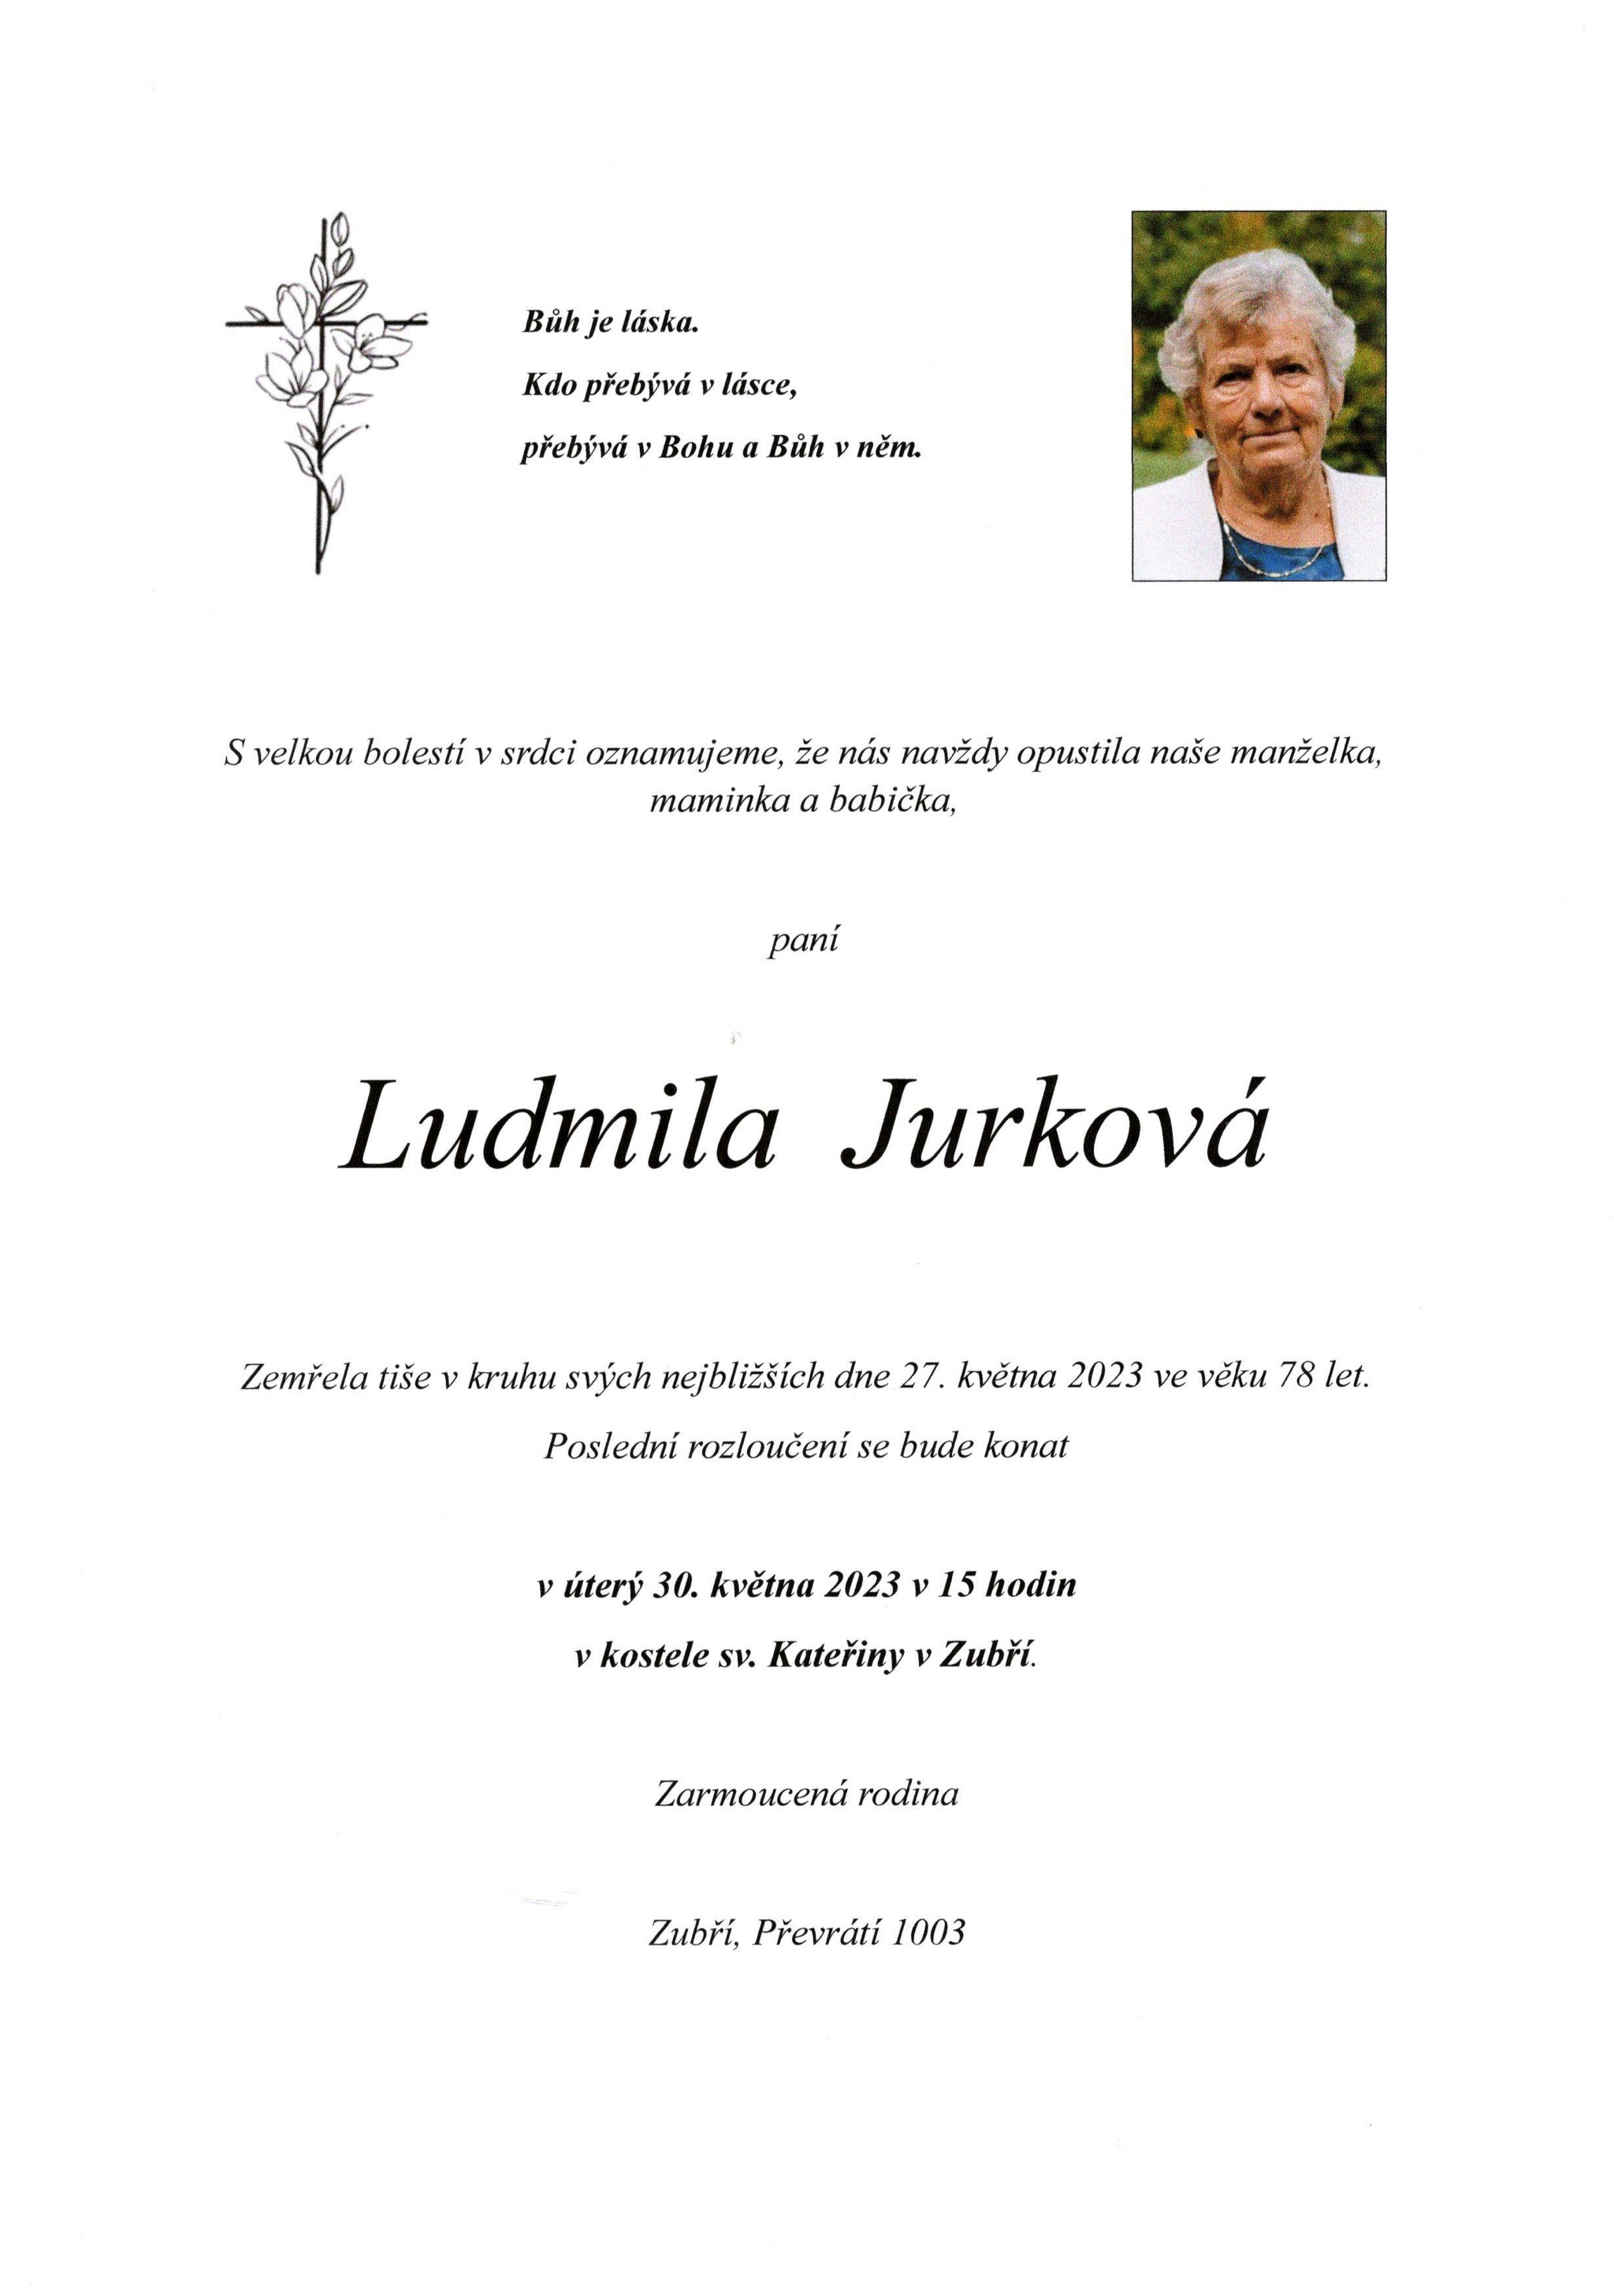 Ludmila Jurková